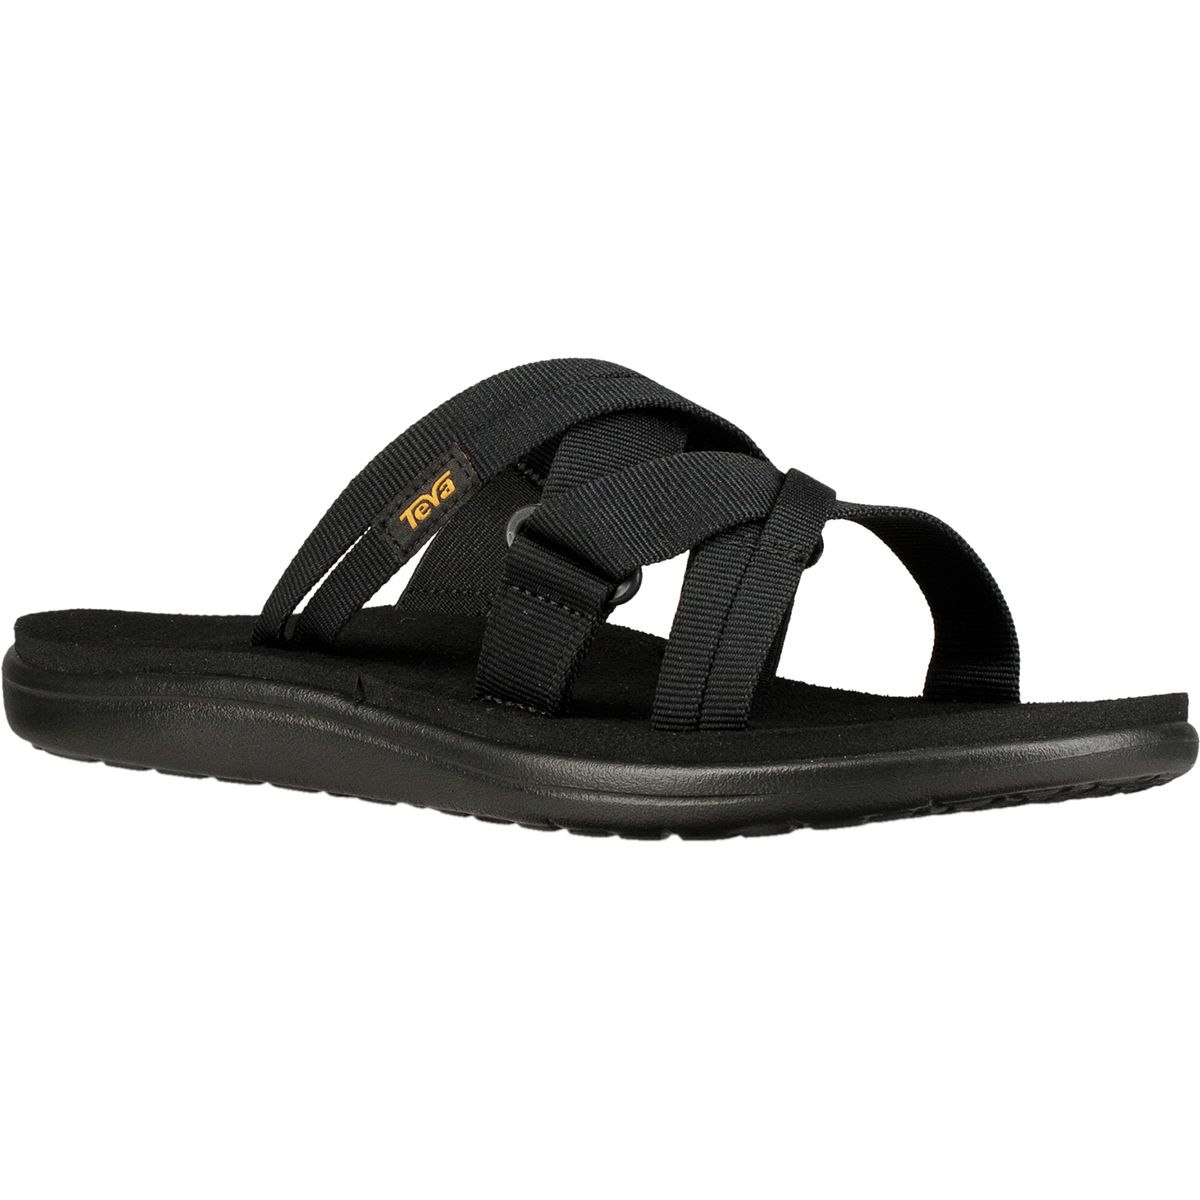 black friday ugg slipper deals